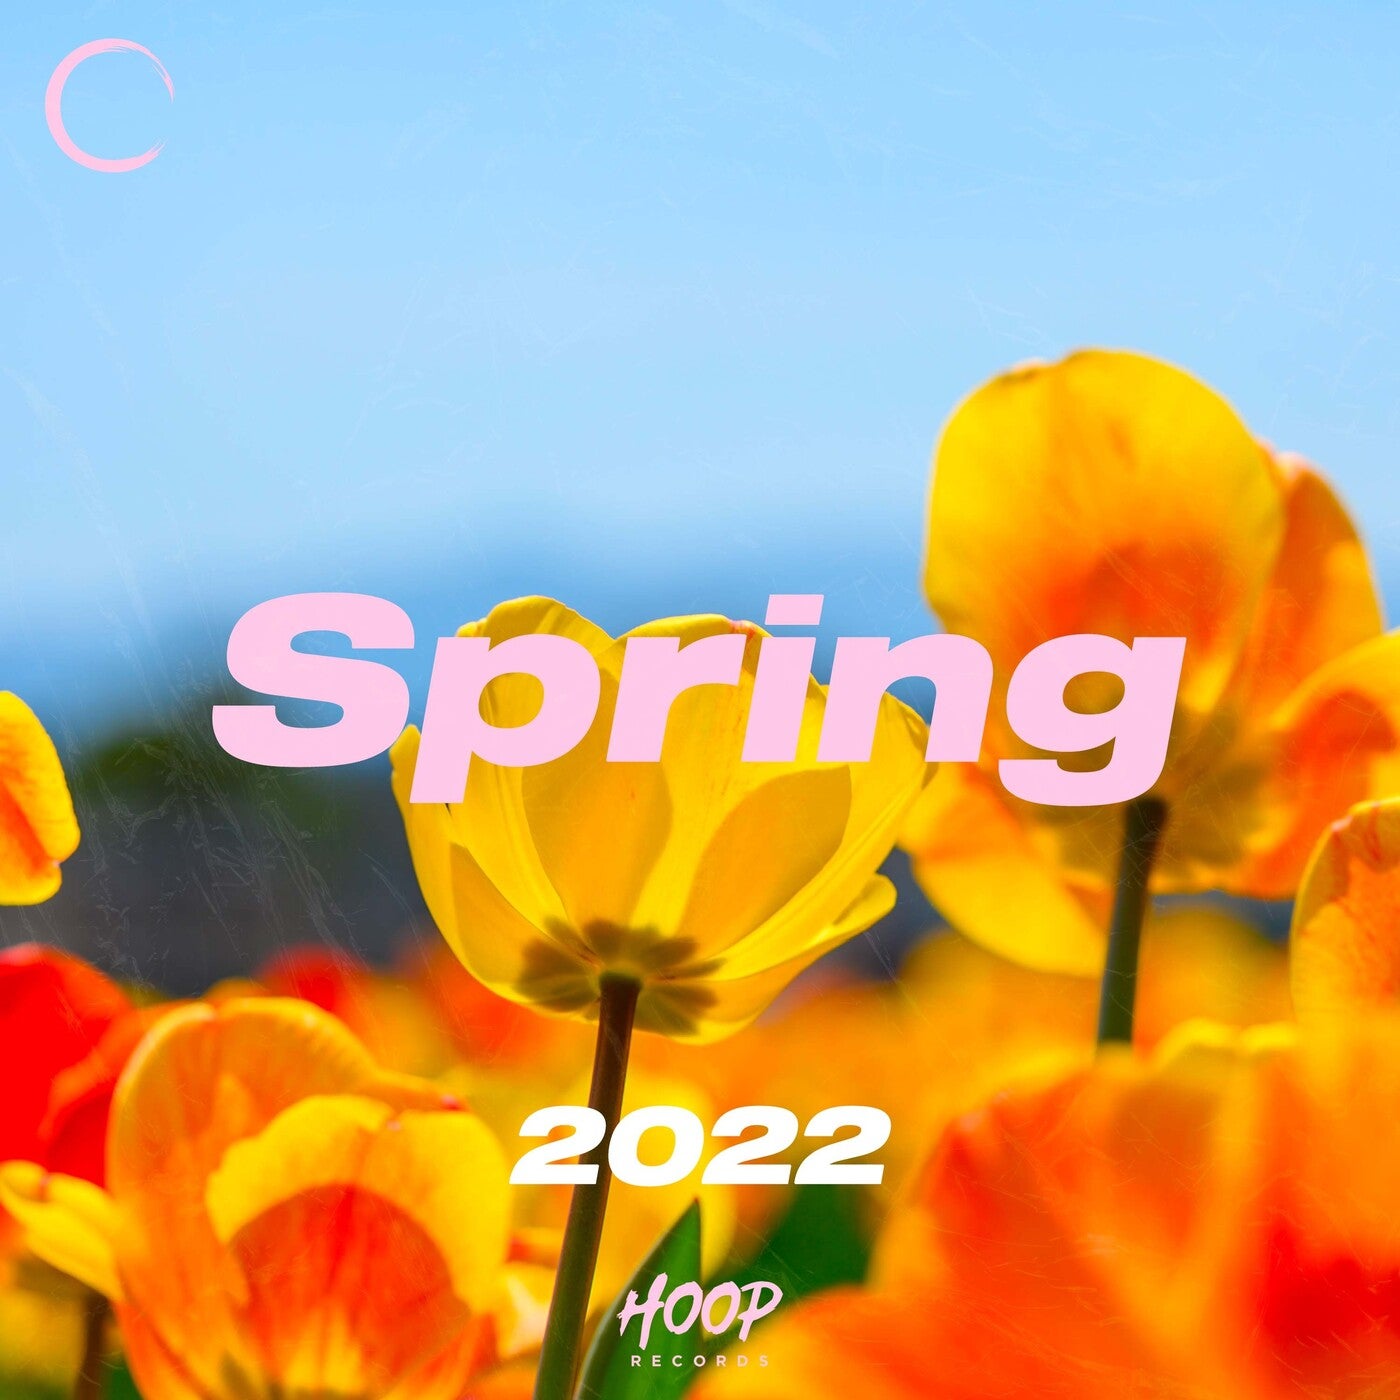 Spring 2022 date